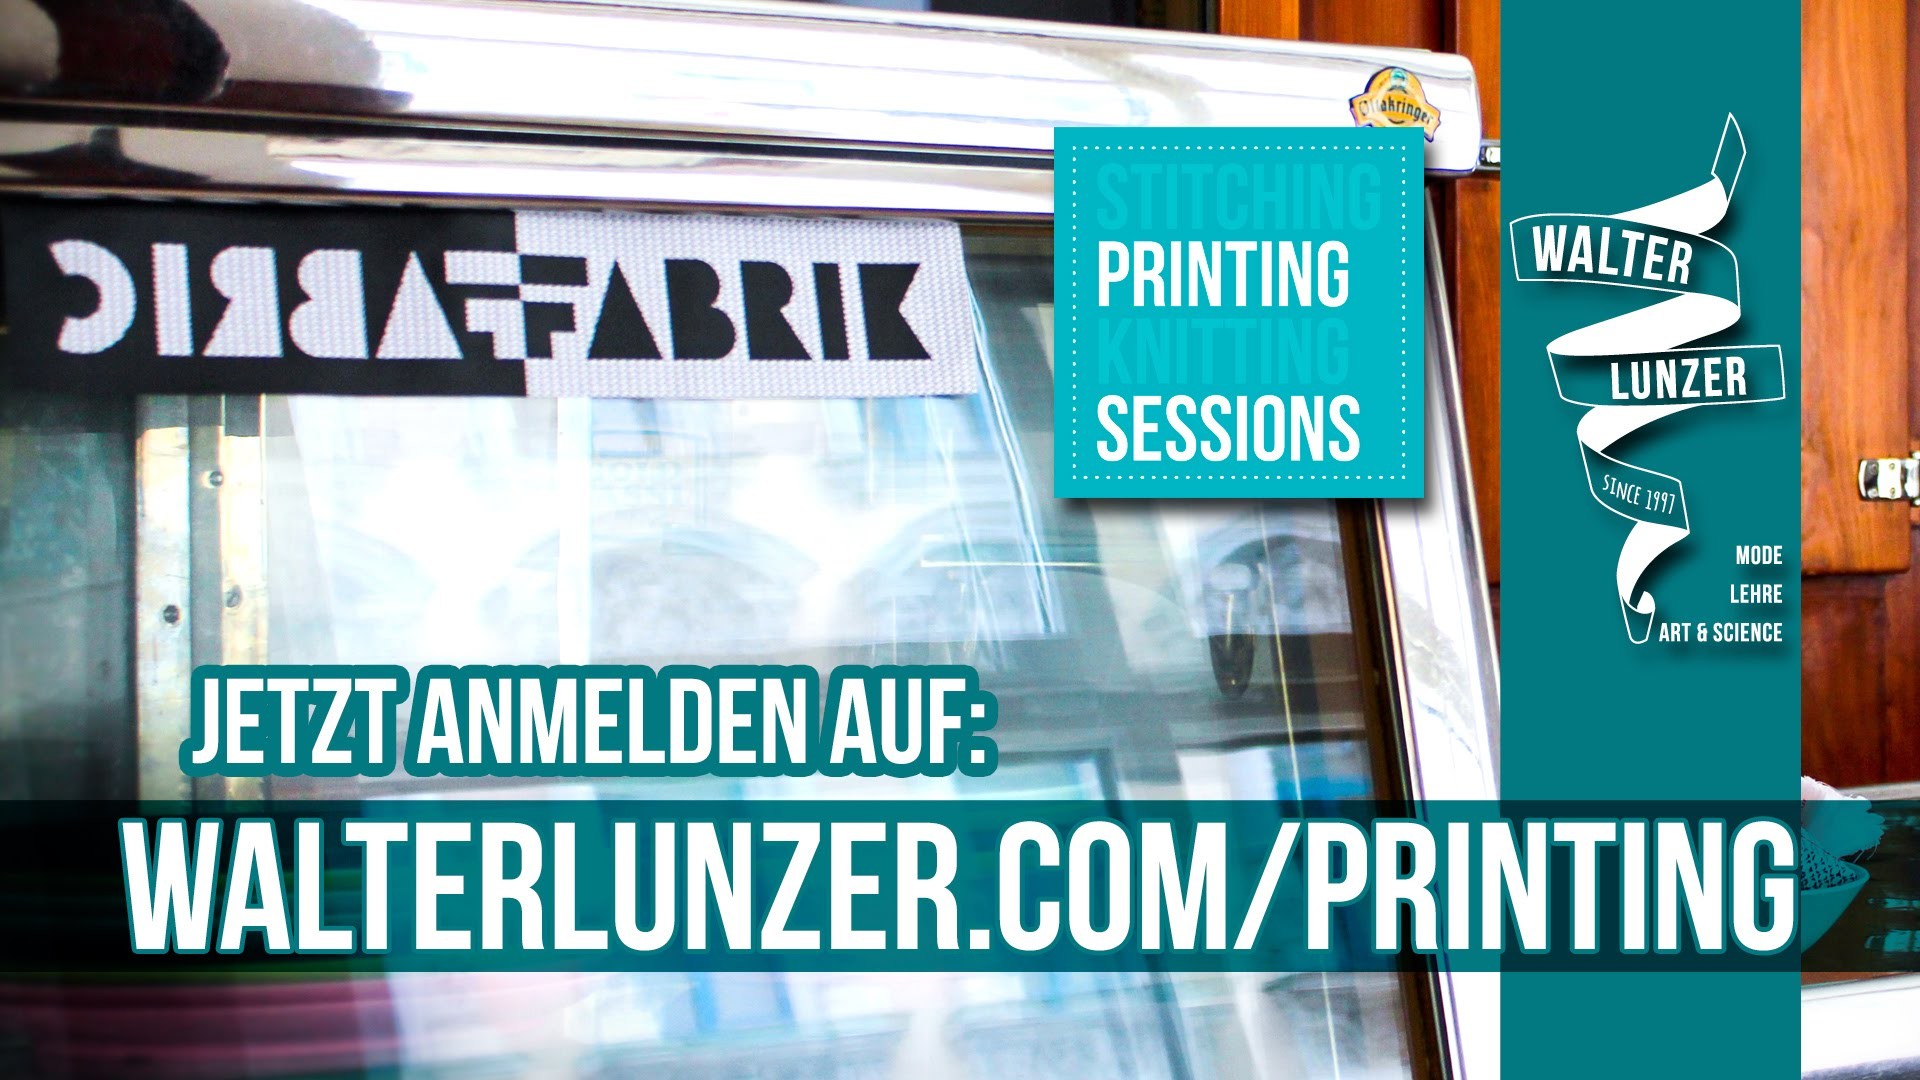 Printing Sessions - DIY Siebdruck - walterlunzer.com & FabricFabrik